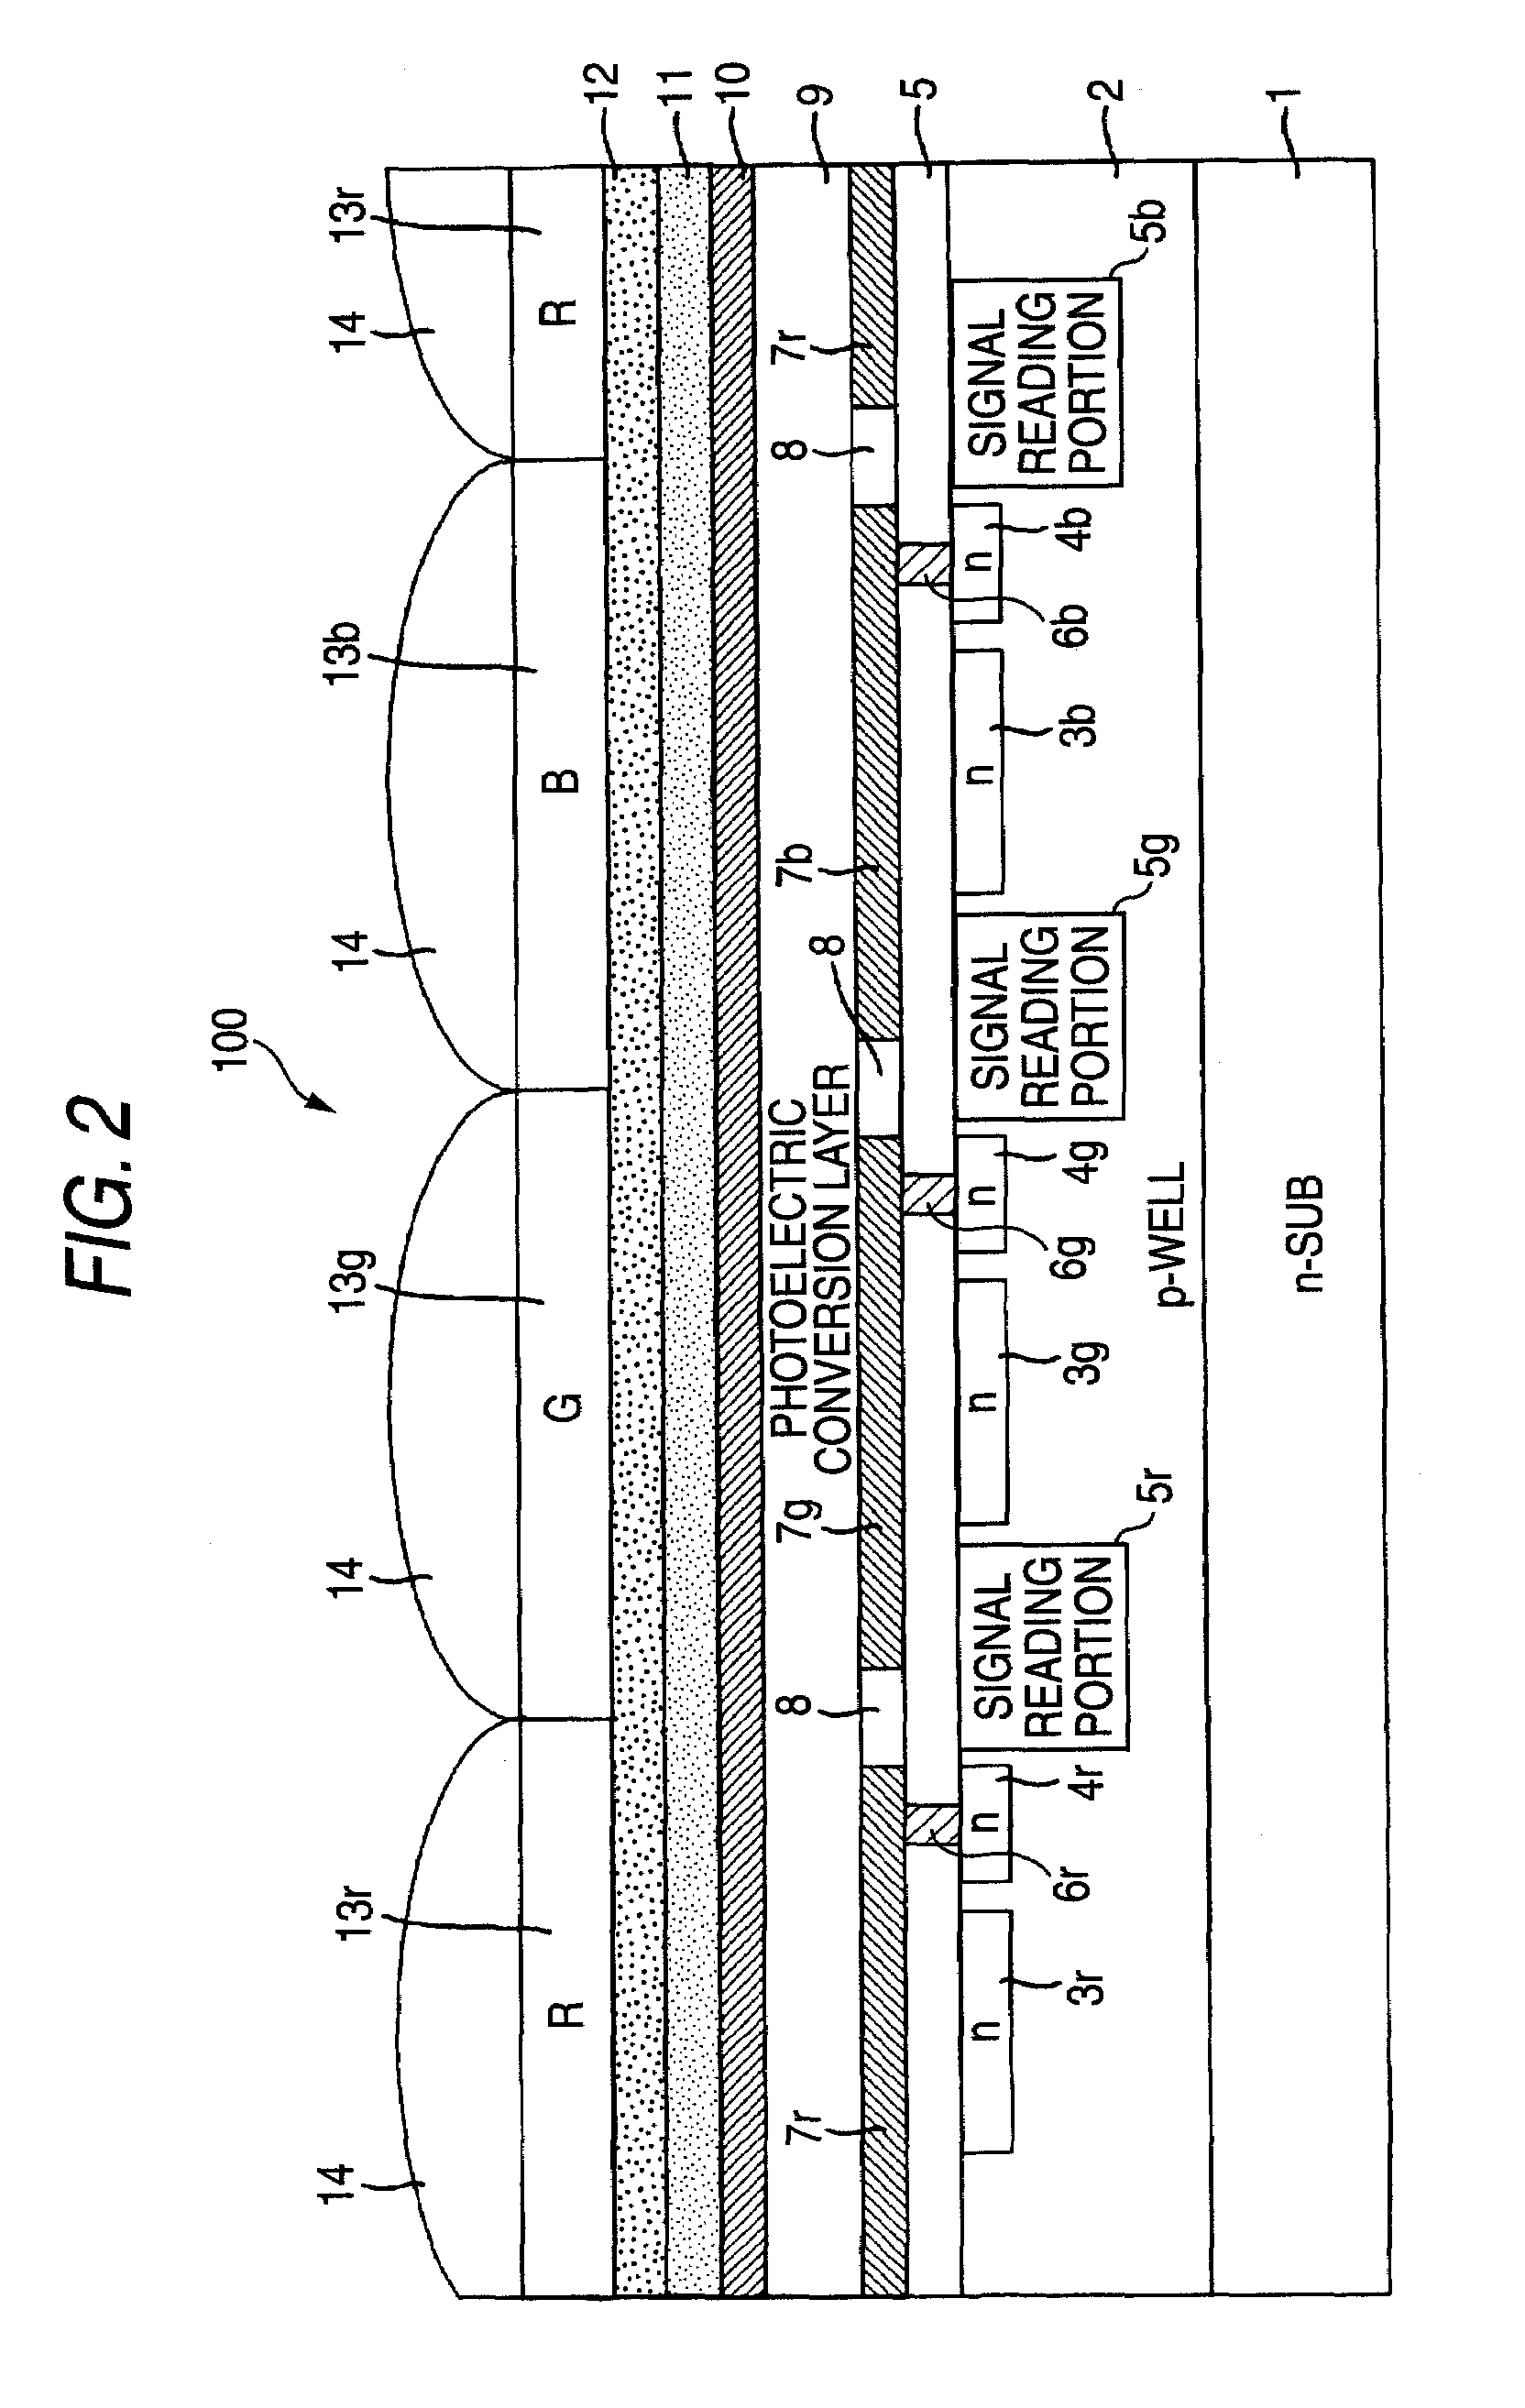 Image processing apparatus, endoscope, and computer readable medium